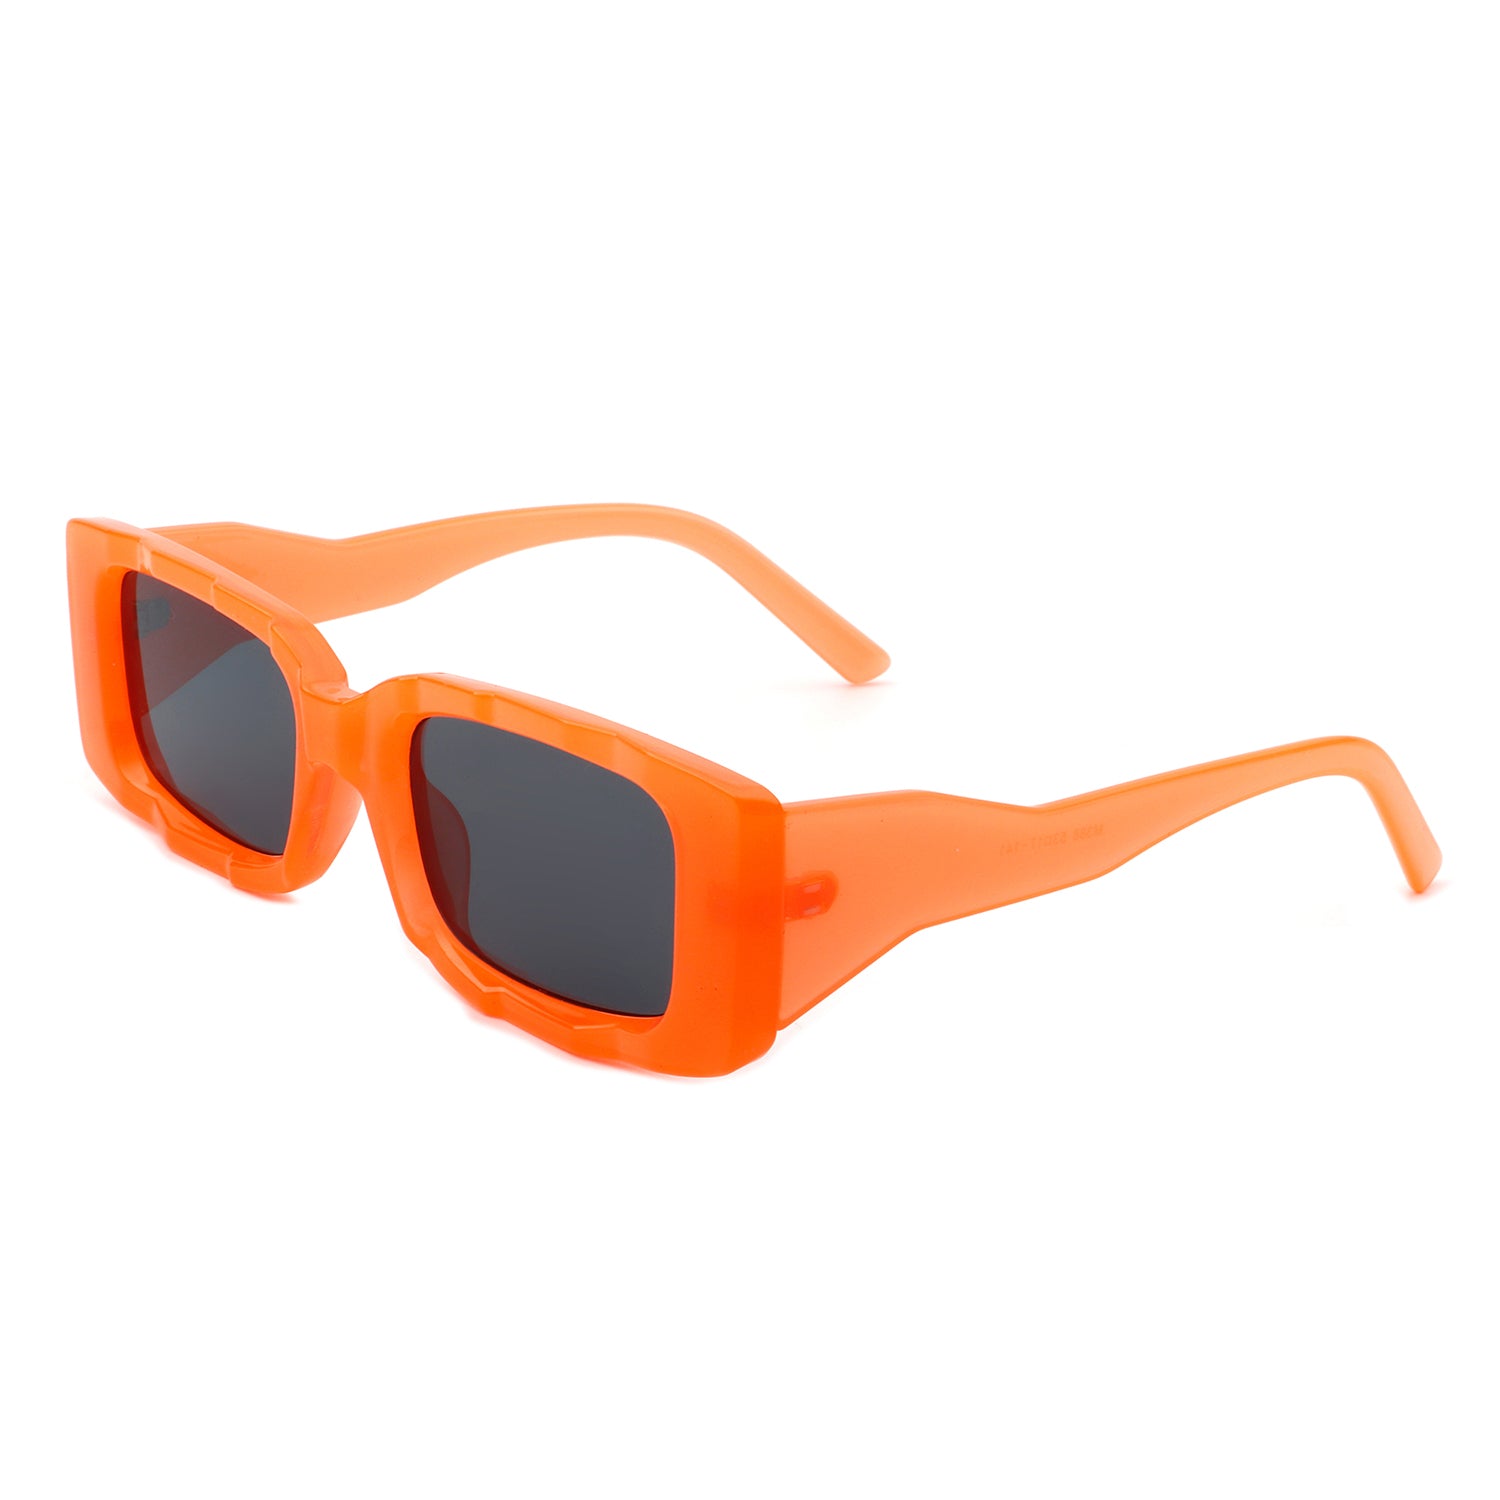 HS1089 - Rectangle Retro Flat Top Fashion Vintage Square Sunglasses